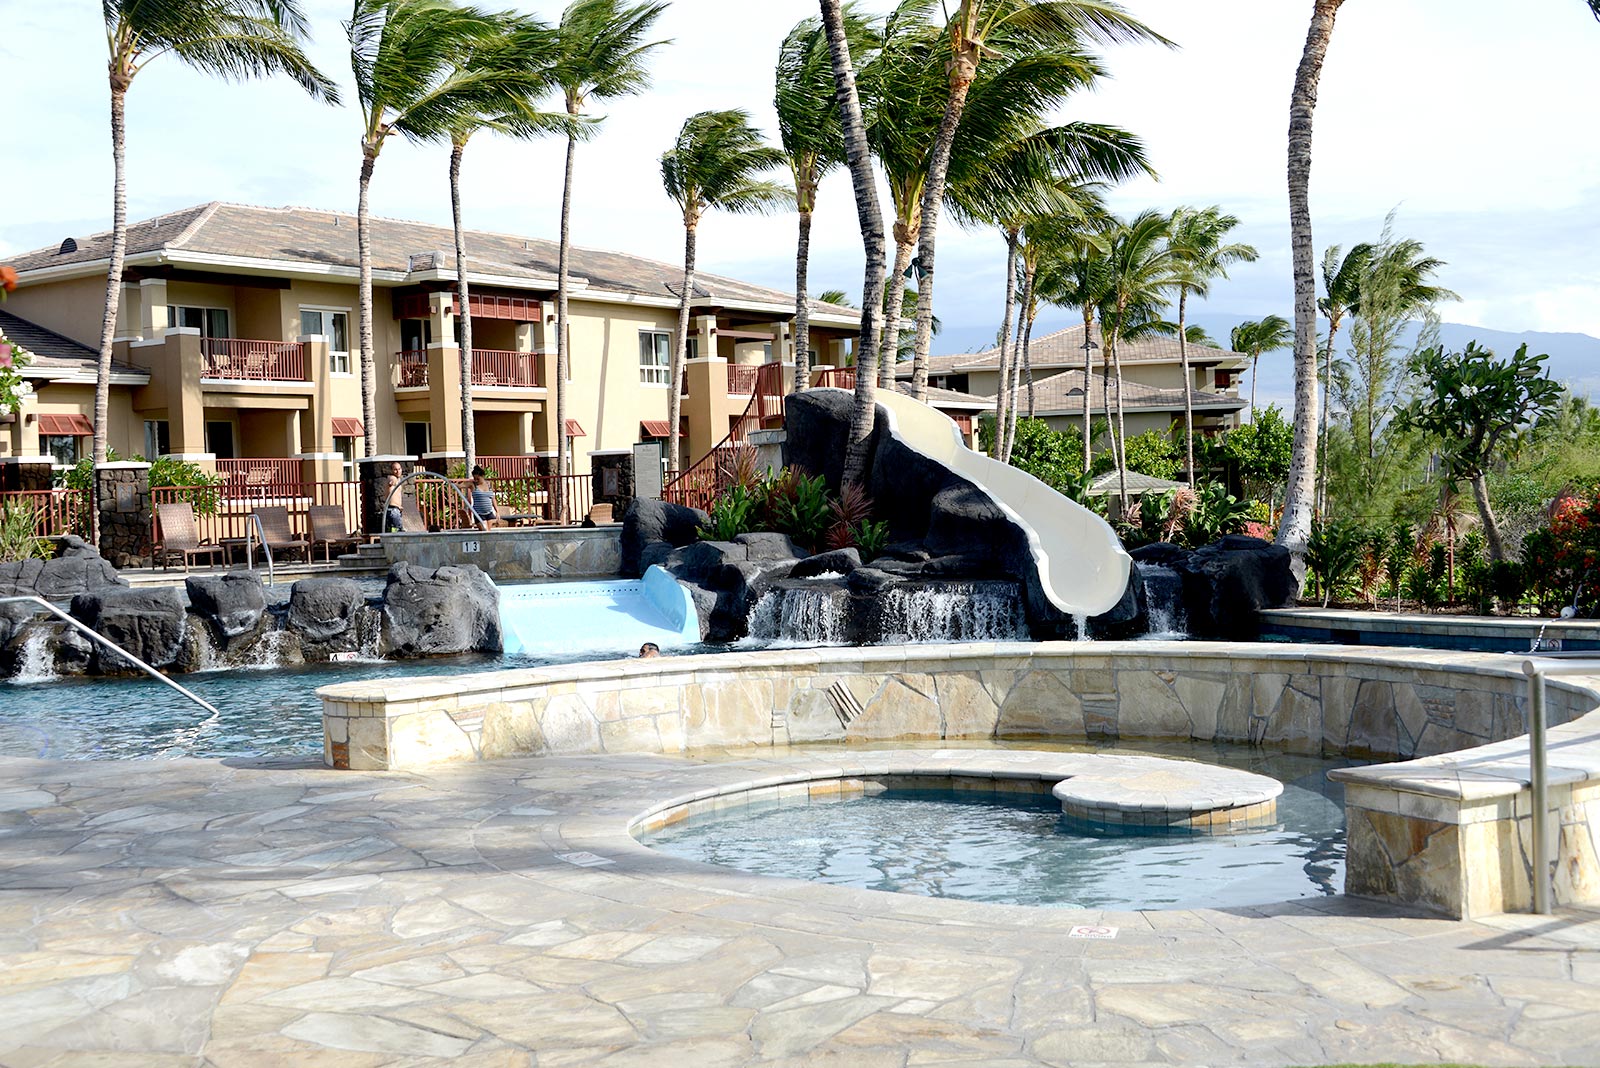 The Bay Club at Waikoloa Beach Resort Timeshare Resales